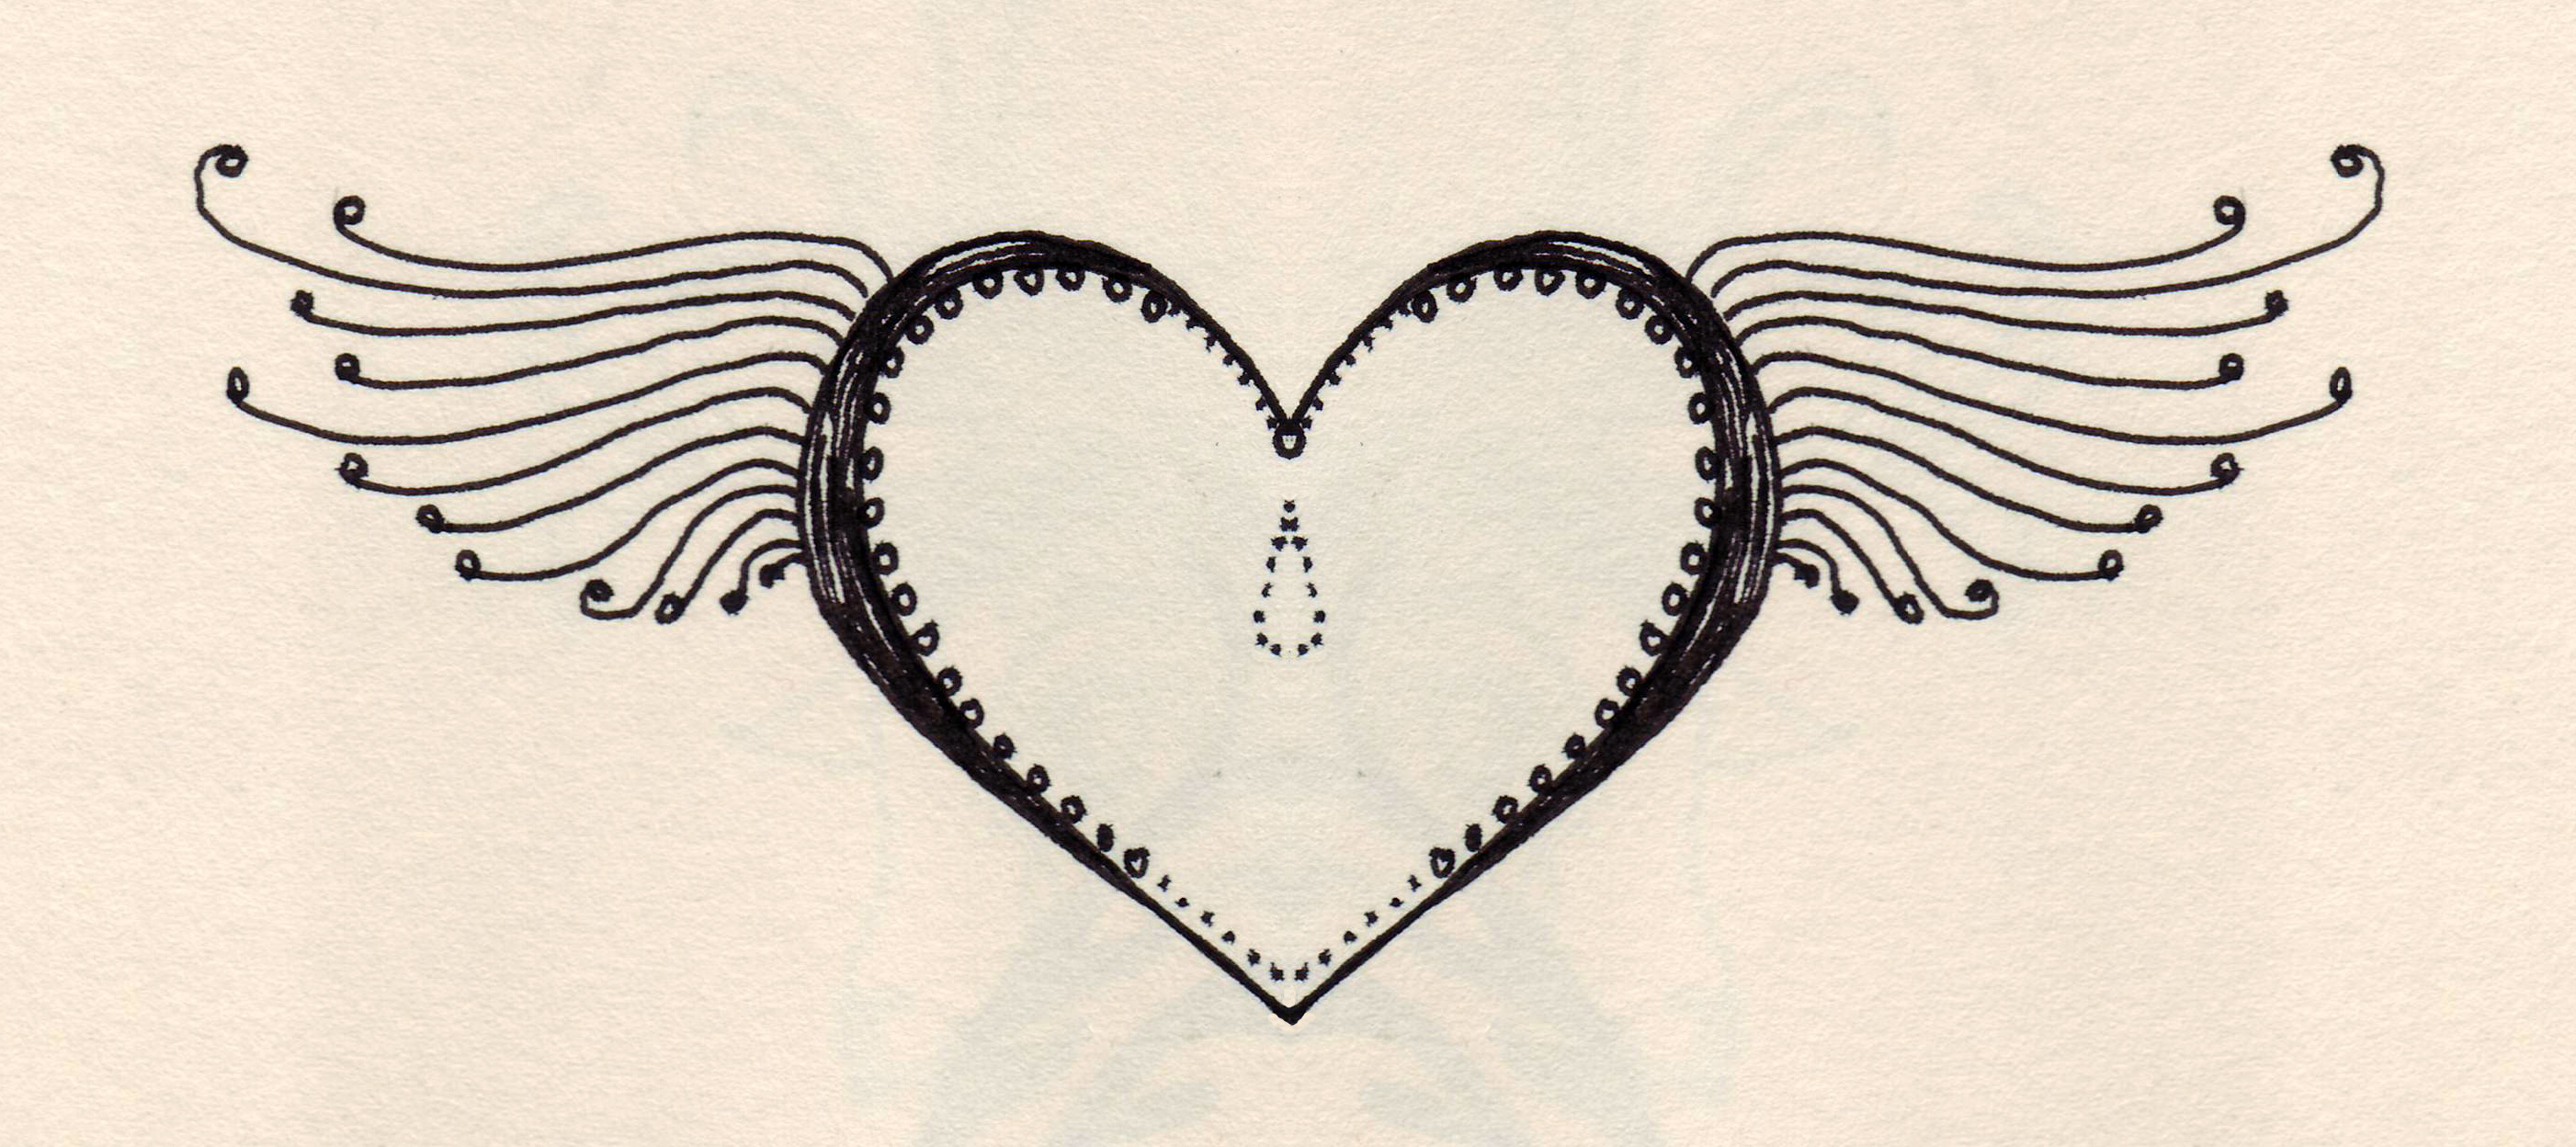 Love Heart Drawings - Gallery